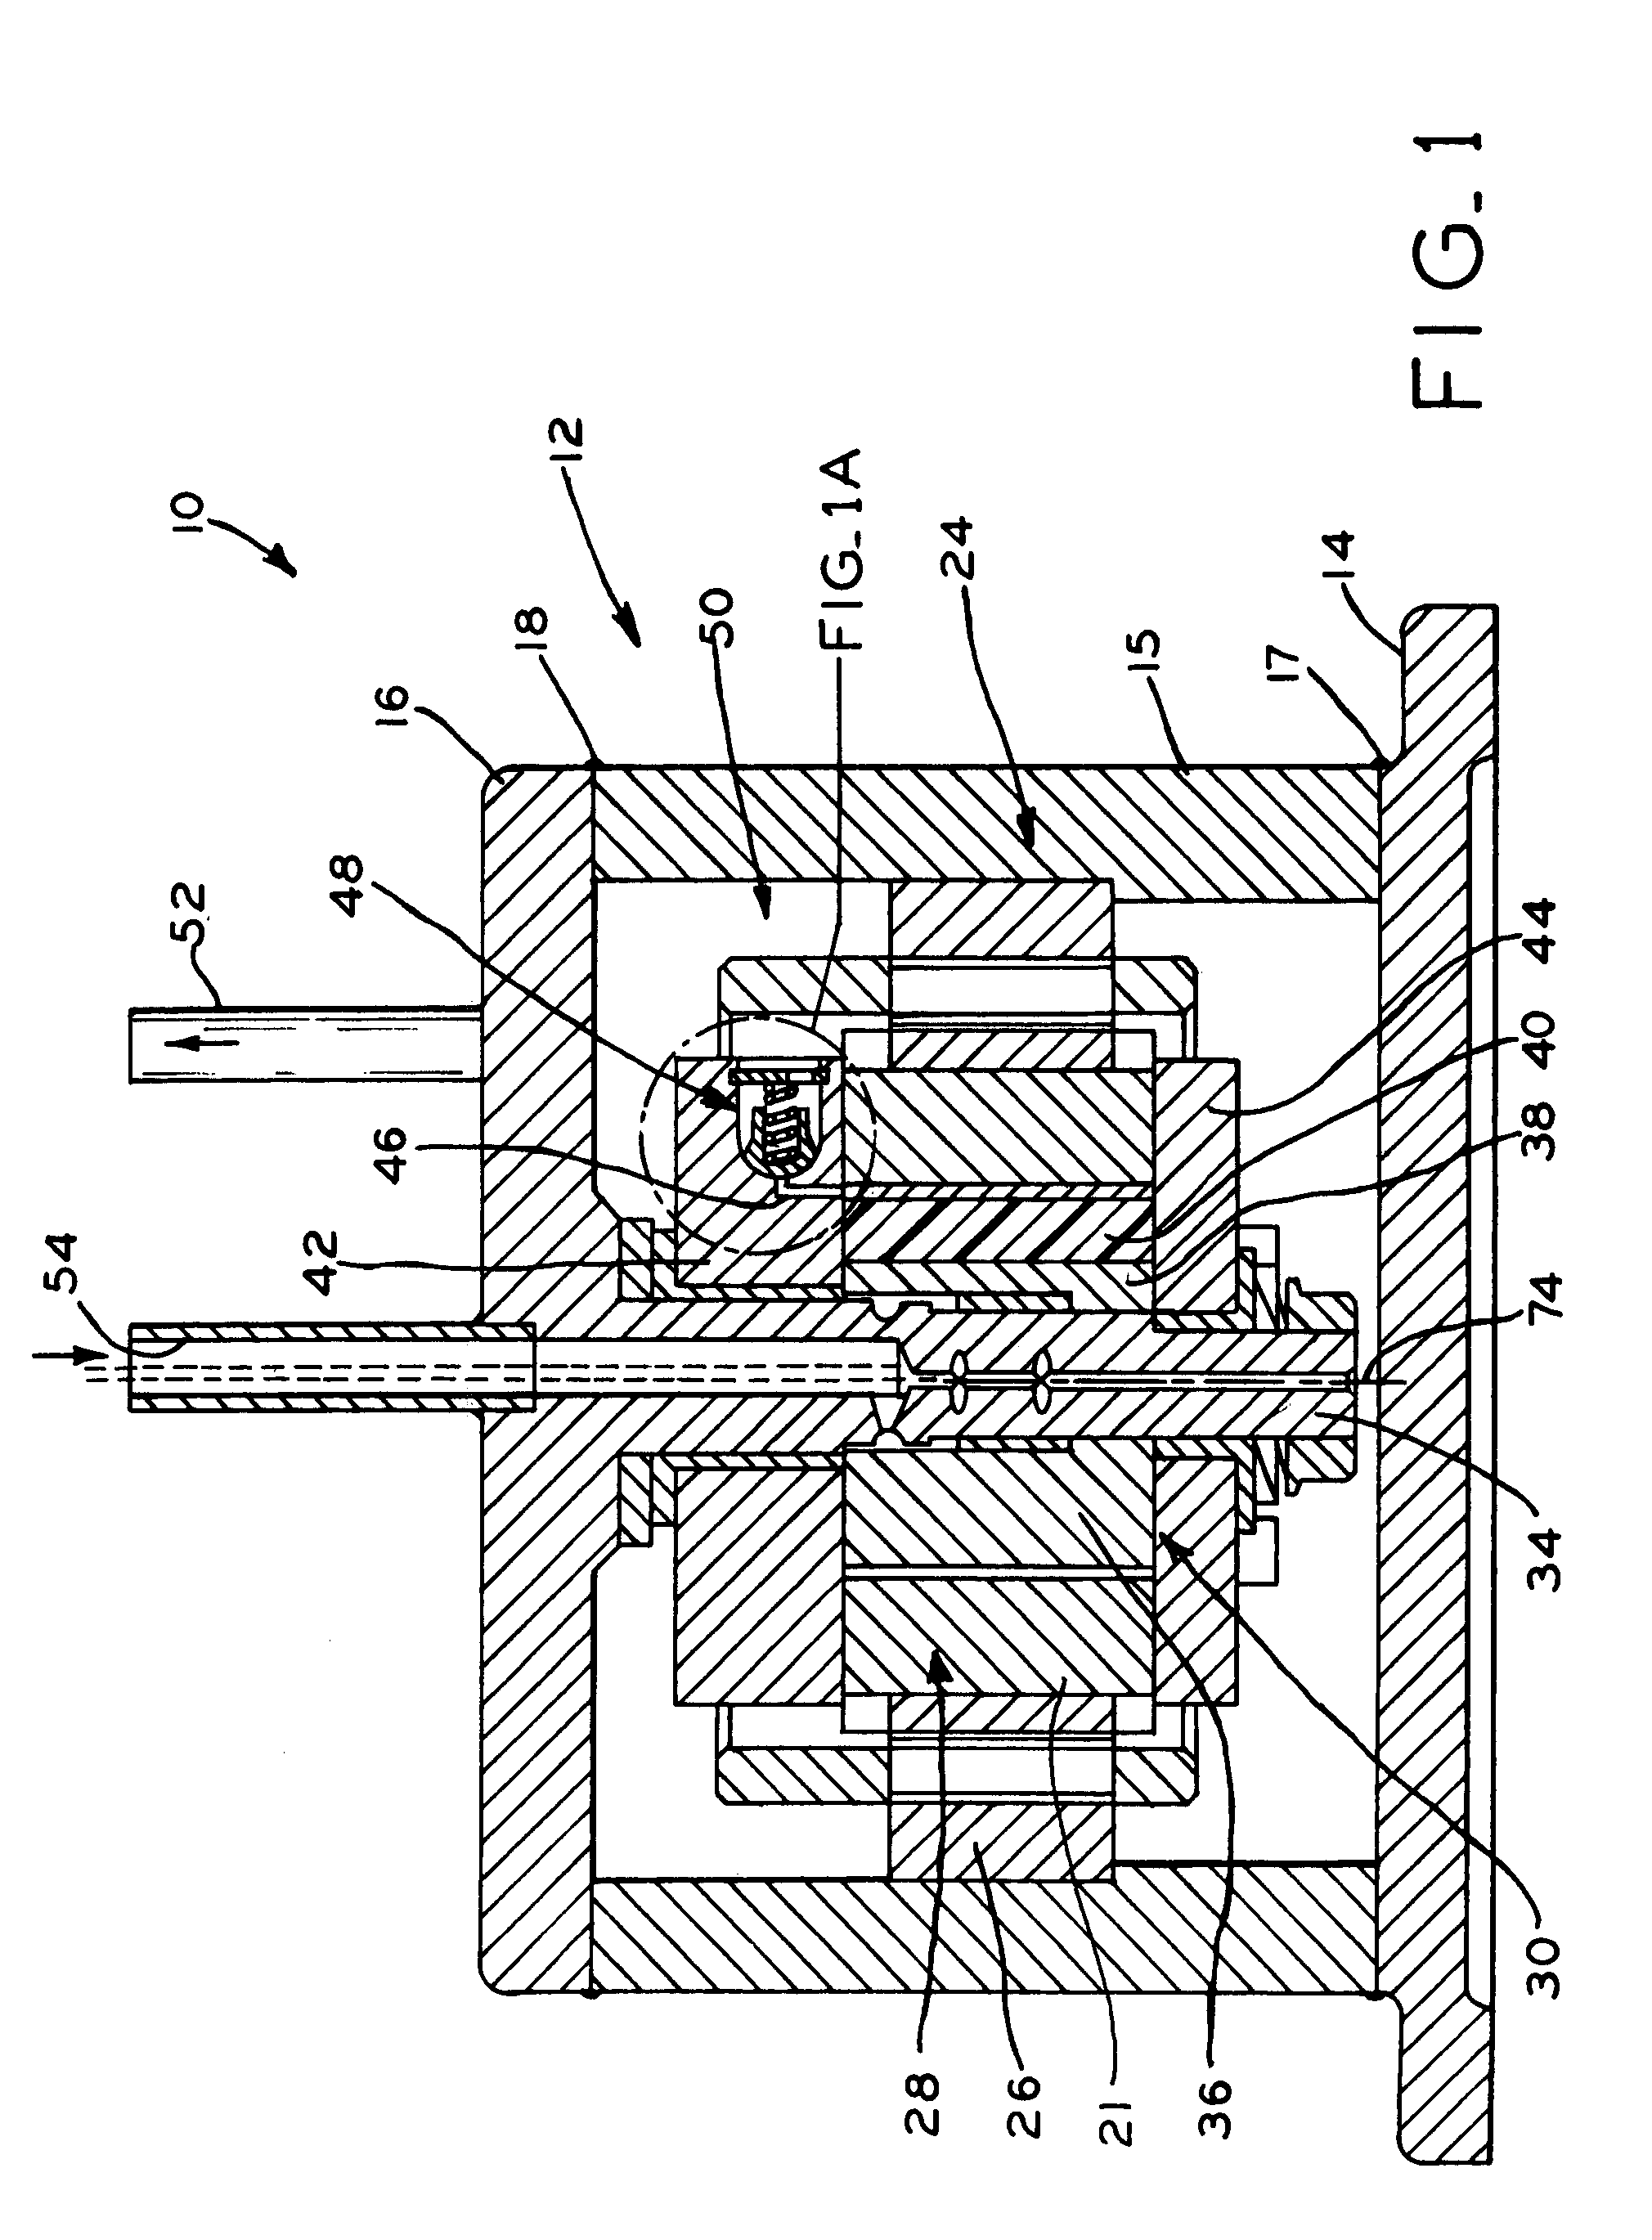 Rotary compressor having a discharge valve